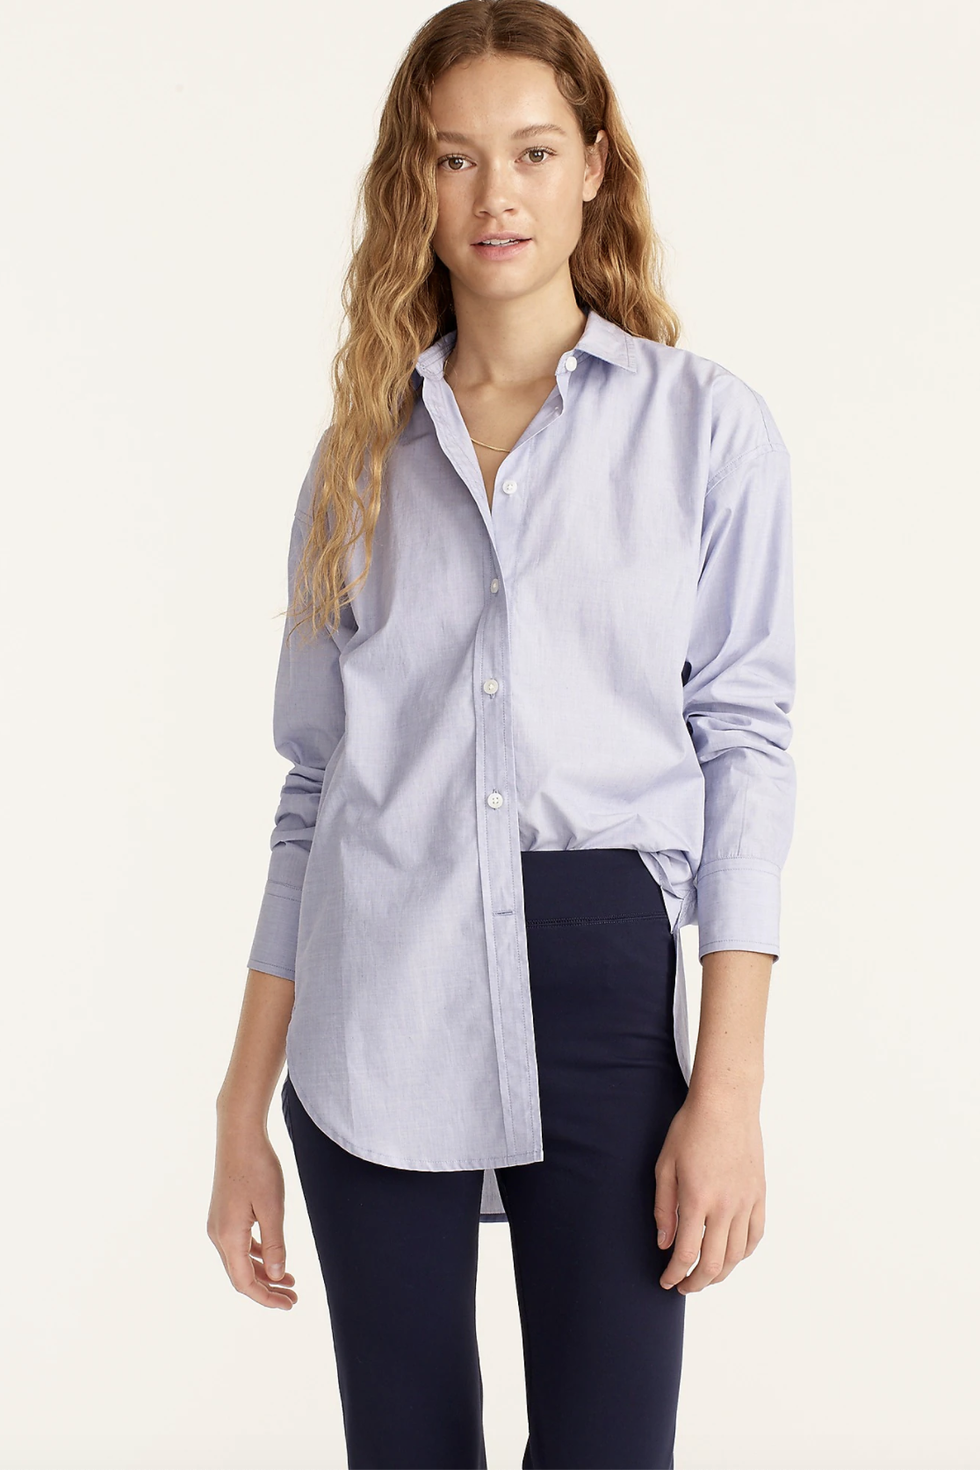 Shirts for Women  Relaxed Button-up Shirt